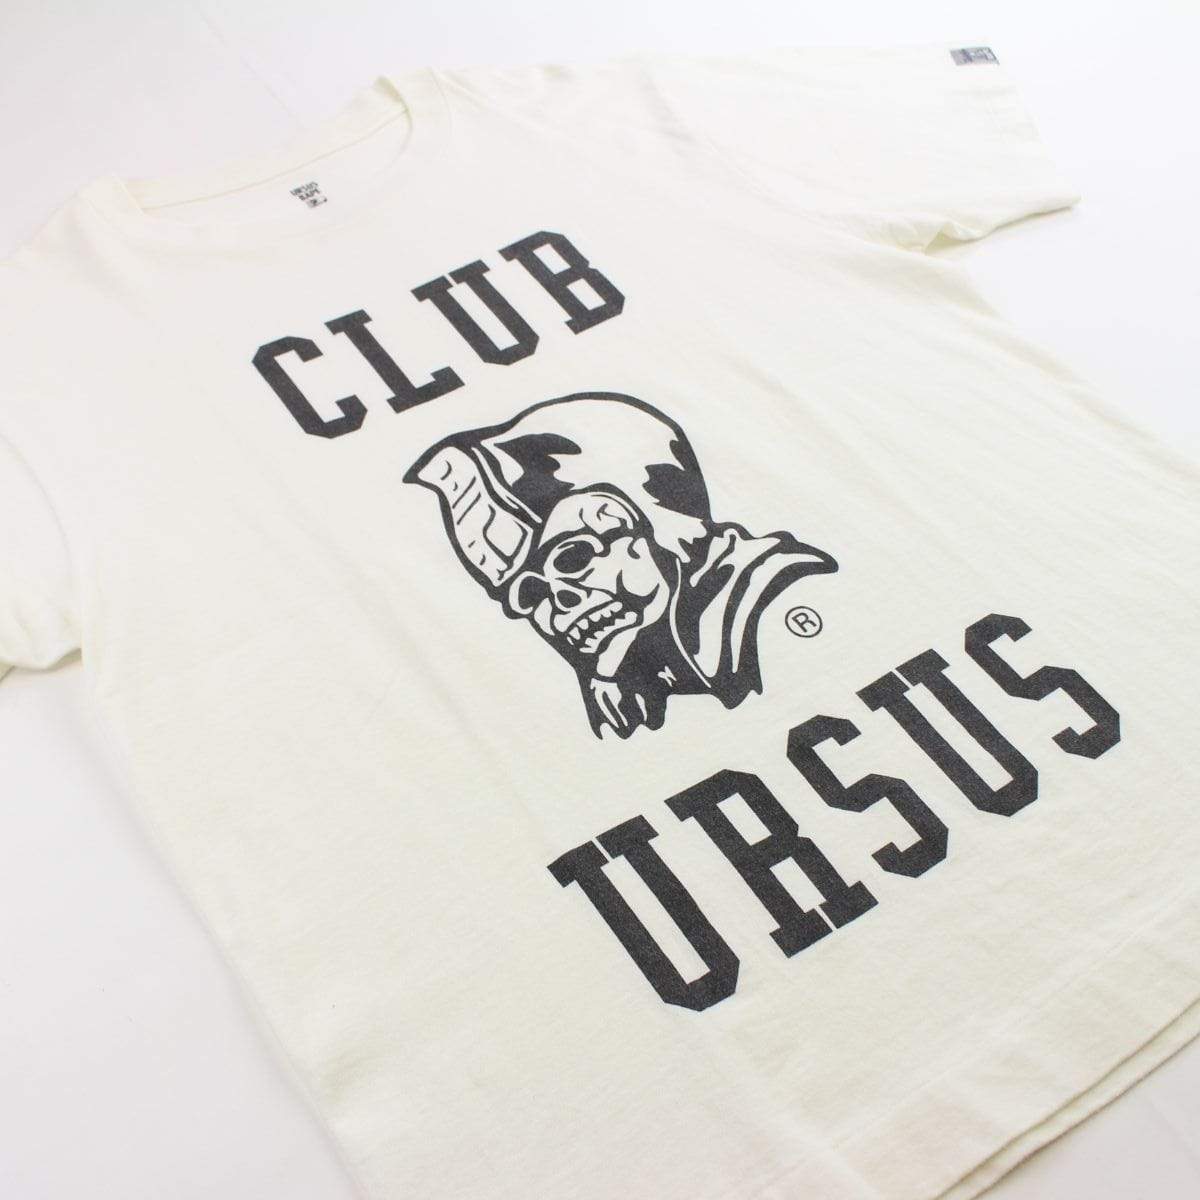 Bape club Ursus Genereals Logo Tee white - SaruGeneral